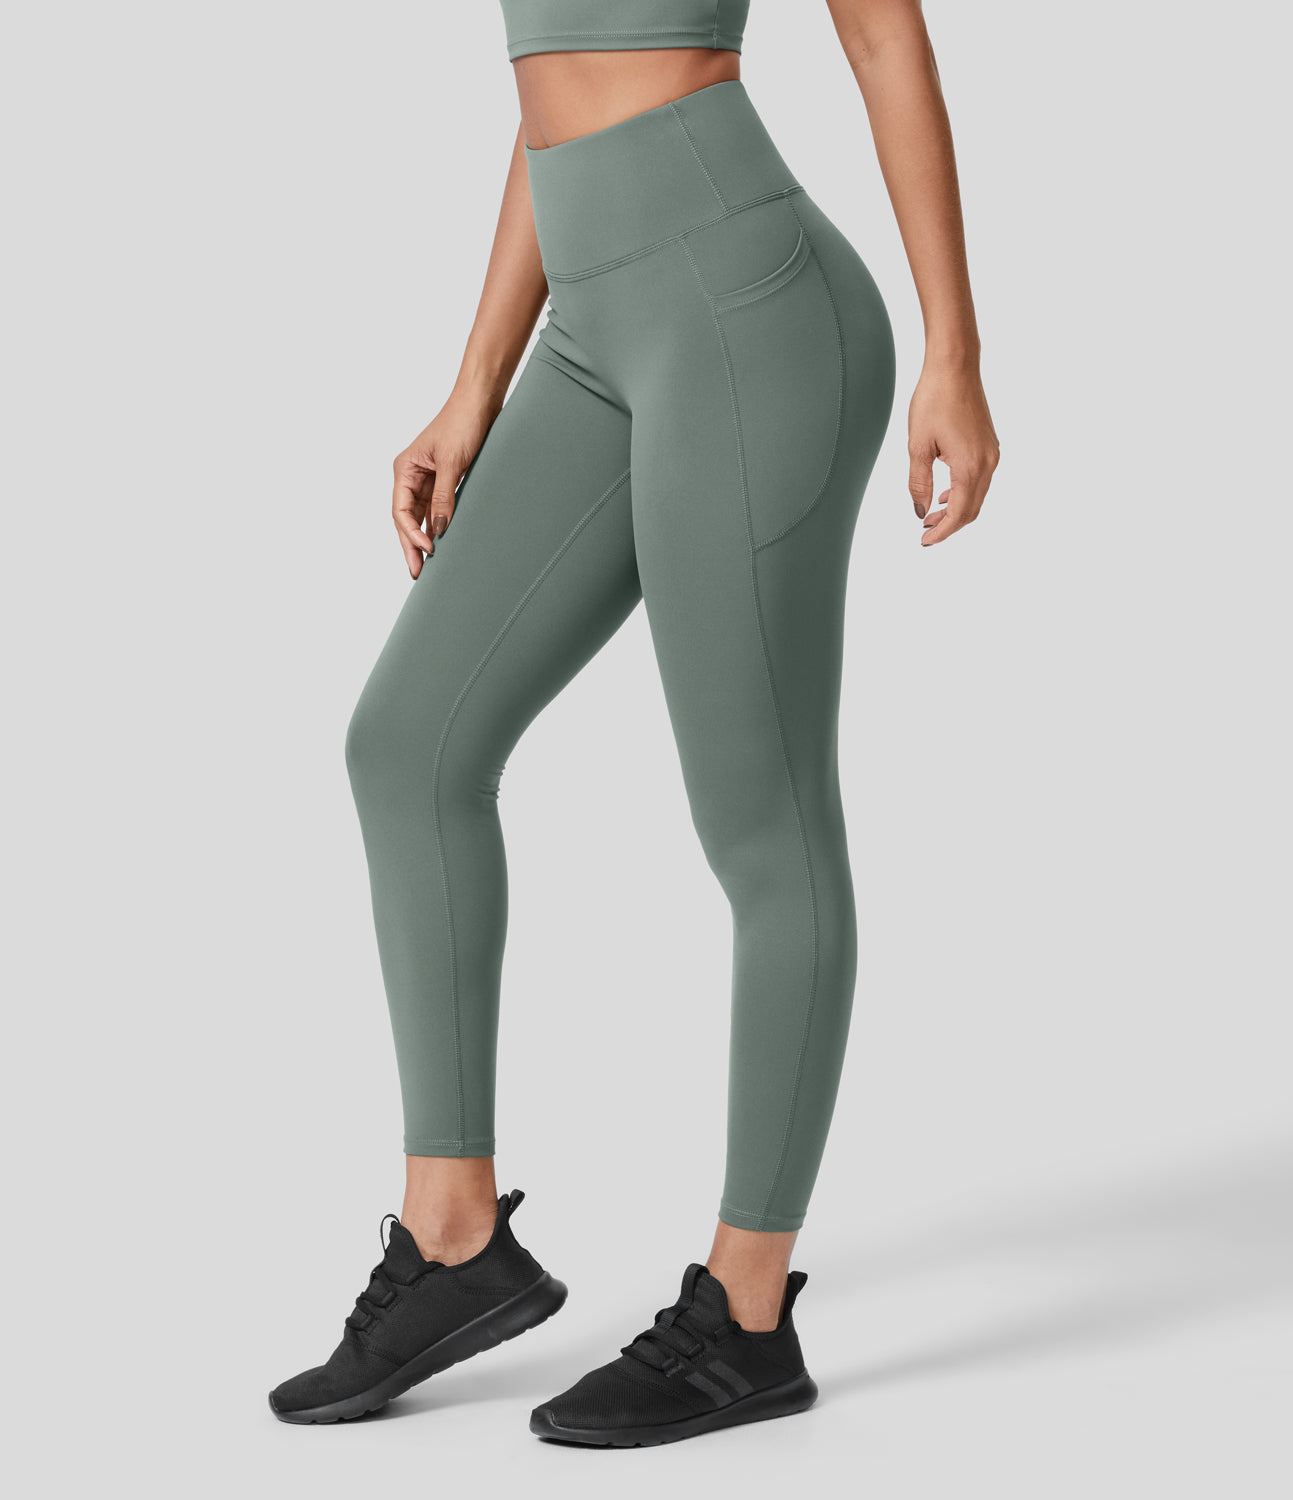 

Halara PatitoffВ® 2.0 Pet Hair Resistant High Waisted Side Pocket Yoga Leggings - Washington Gray Green -  gym leggings